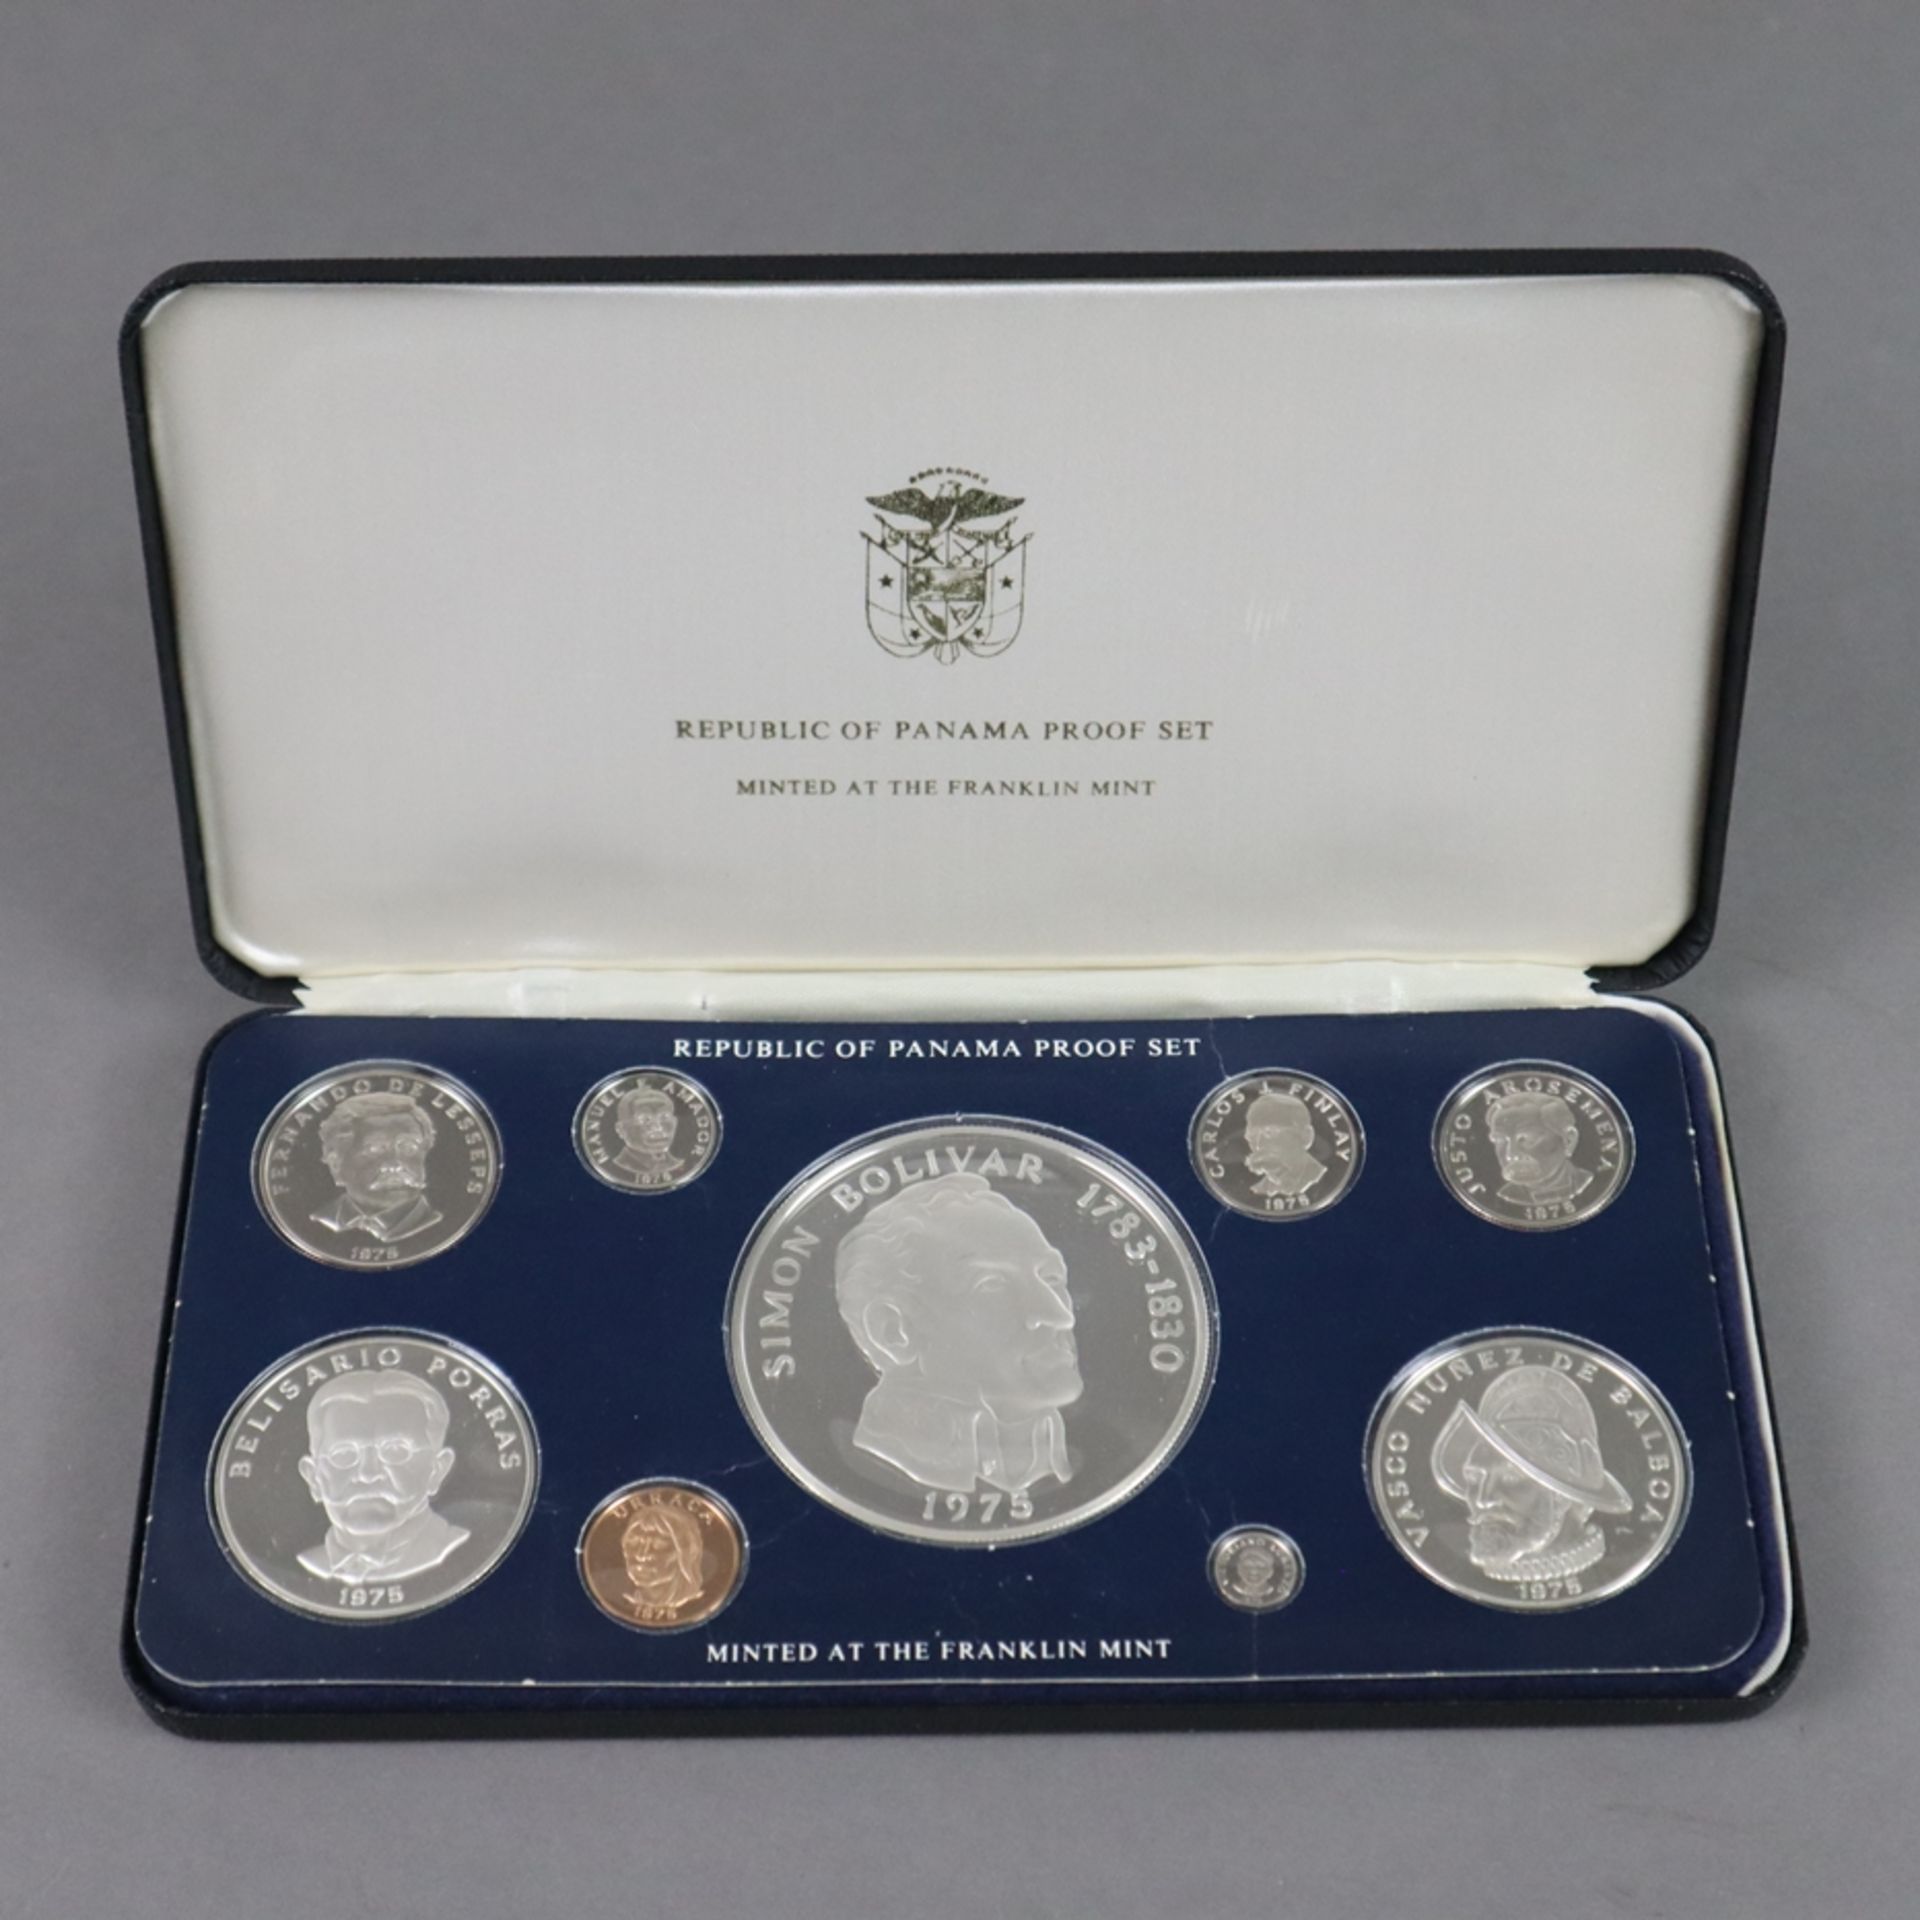 Münzset Republik of Panama 1975 - 925er Silber, Republik Of Panama Proof Set, Franklin Mint, 9 Münz